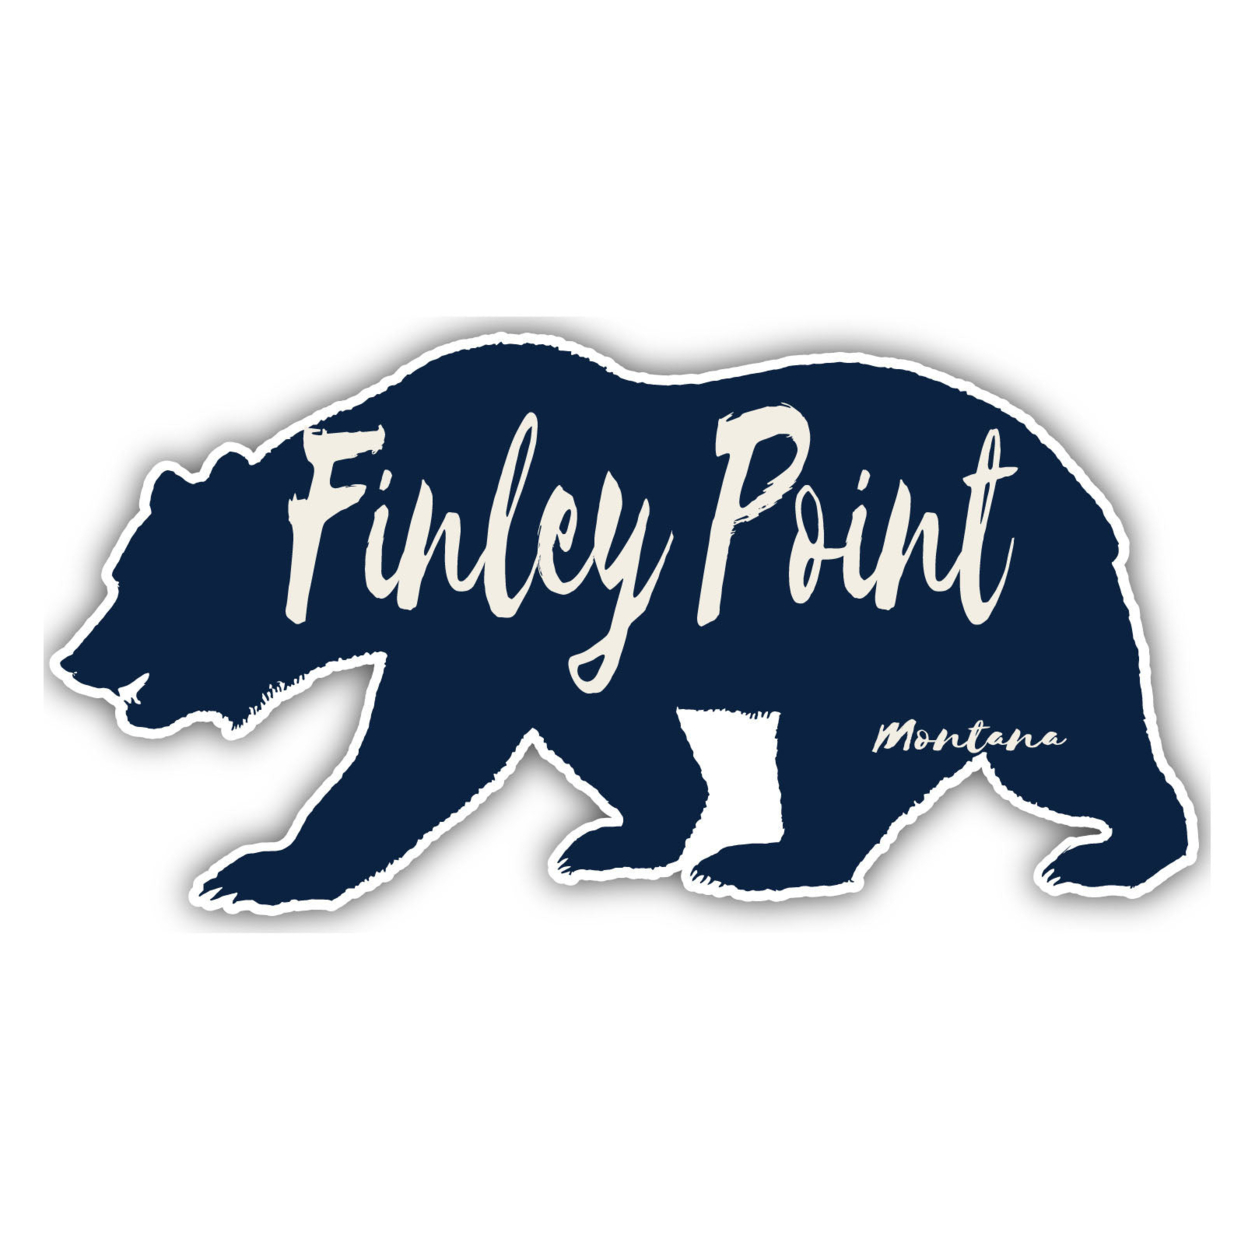 Finley Point Montana Souvenir Decorative Stickers (Choose Theme And Size) - Single Unit, 6-Inch, Bear